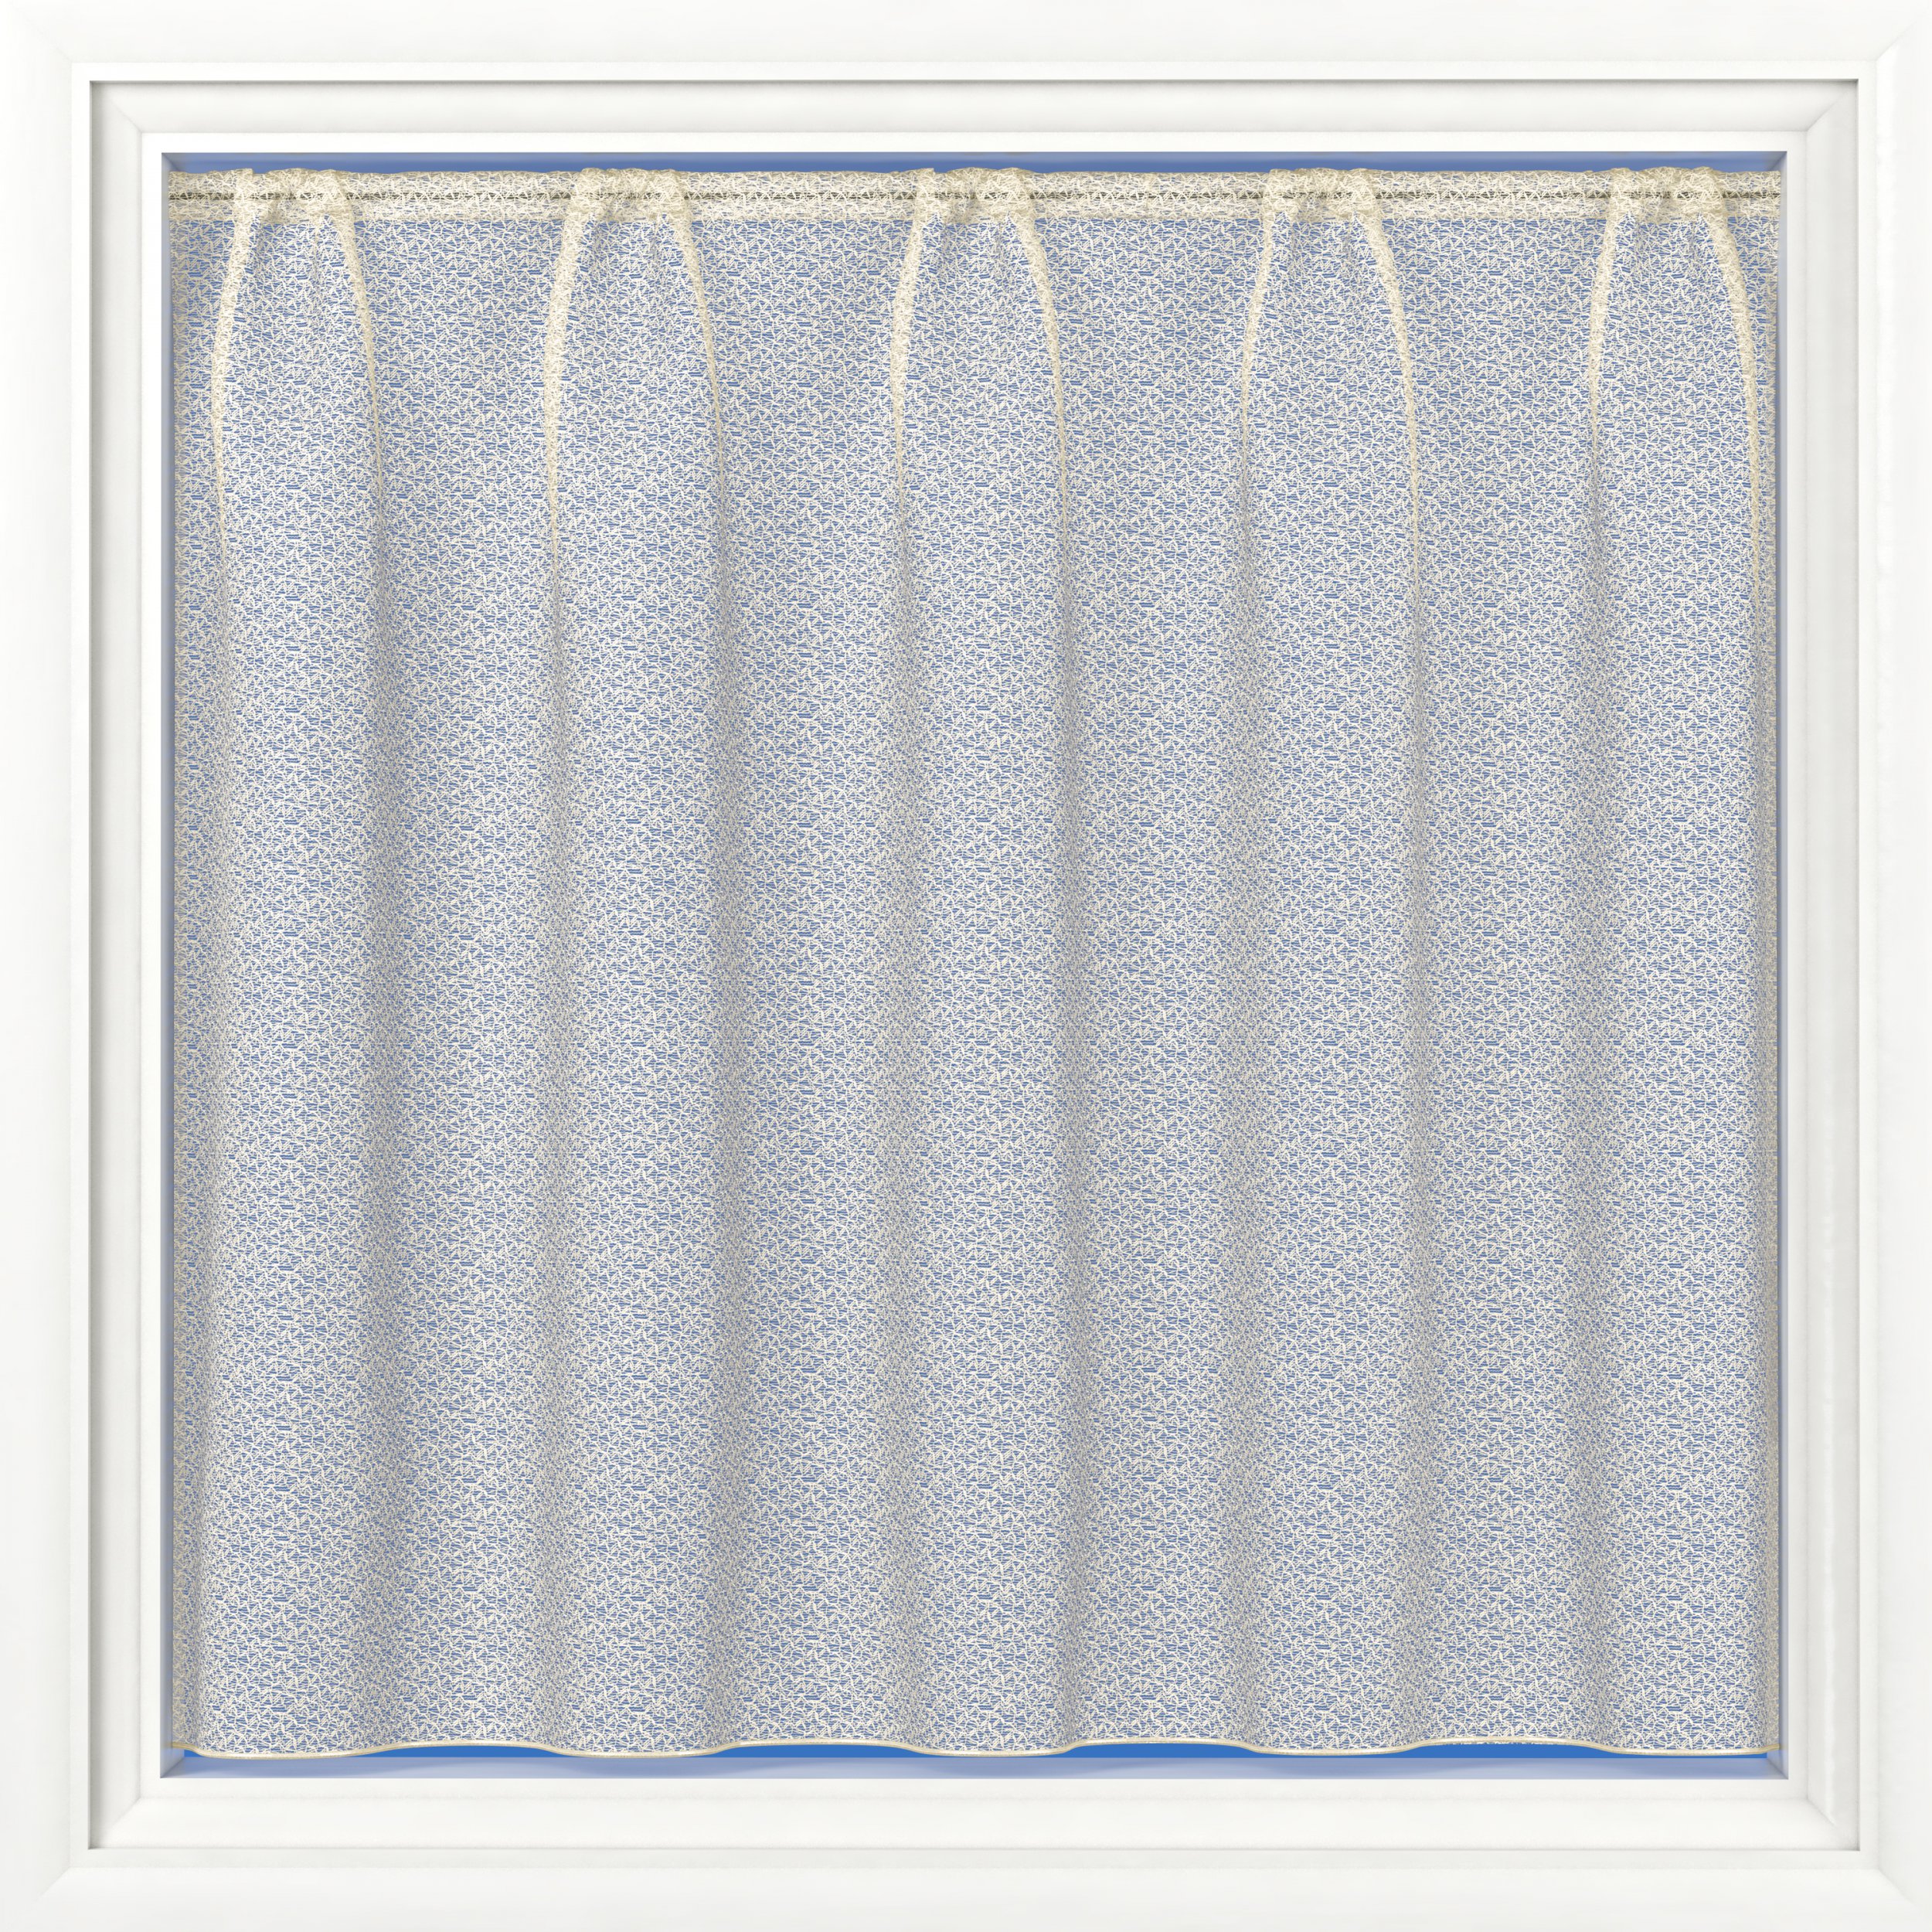 Arabella Ivory Net Curtains | Net Curtains York | Net Curtains